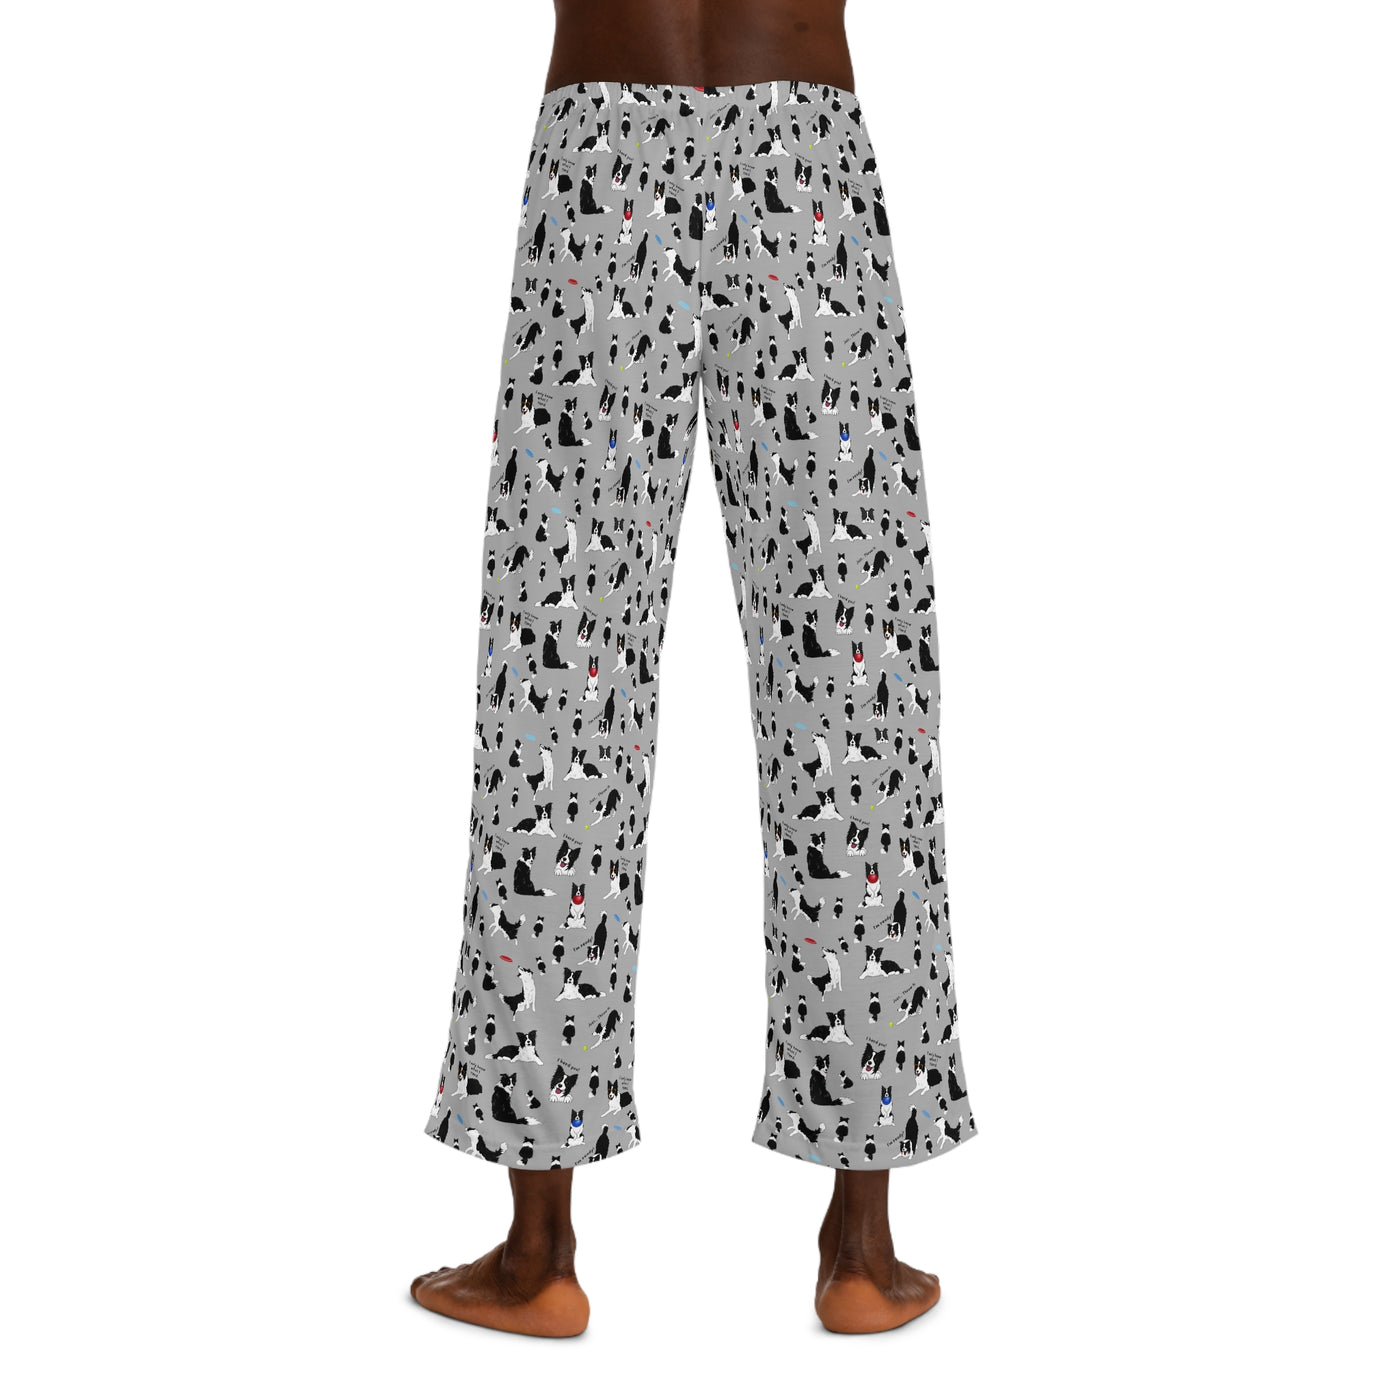 Men's Border Collie Pajama Pants